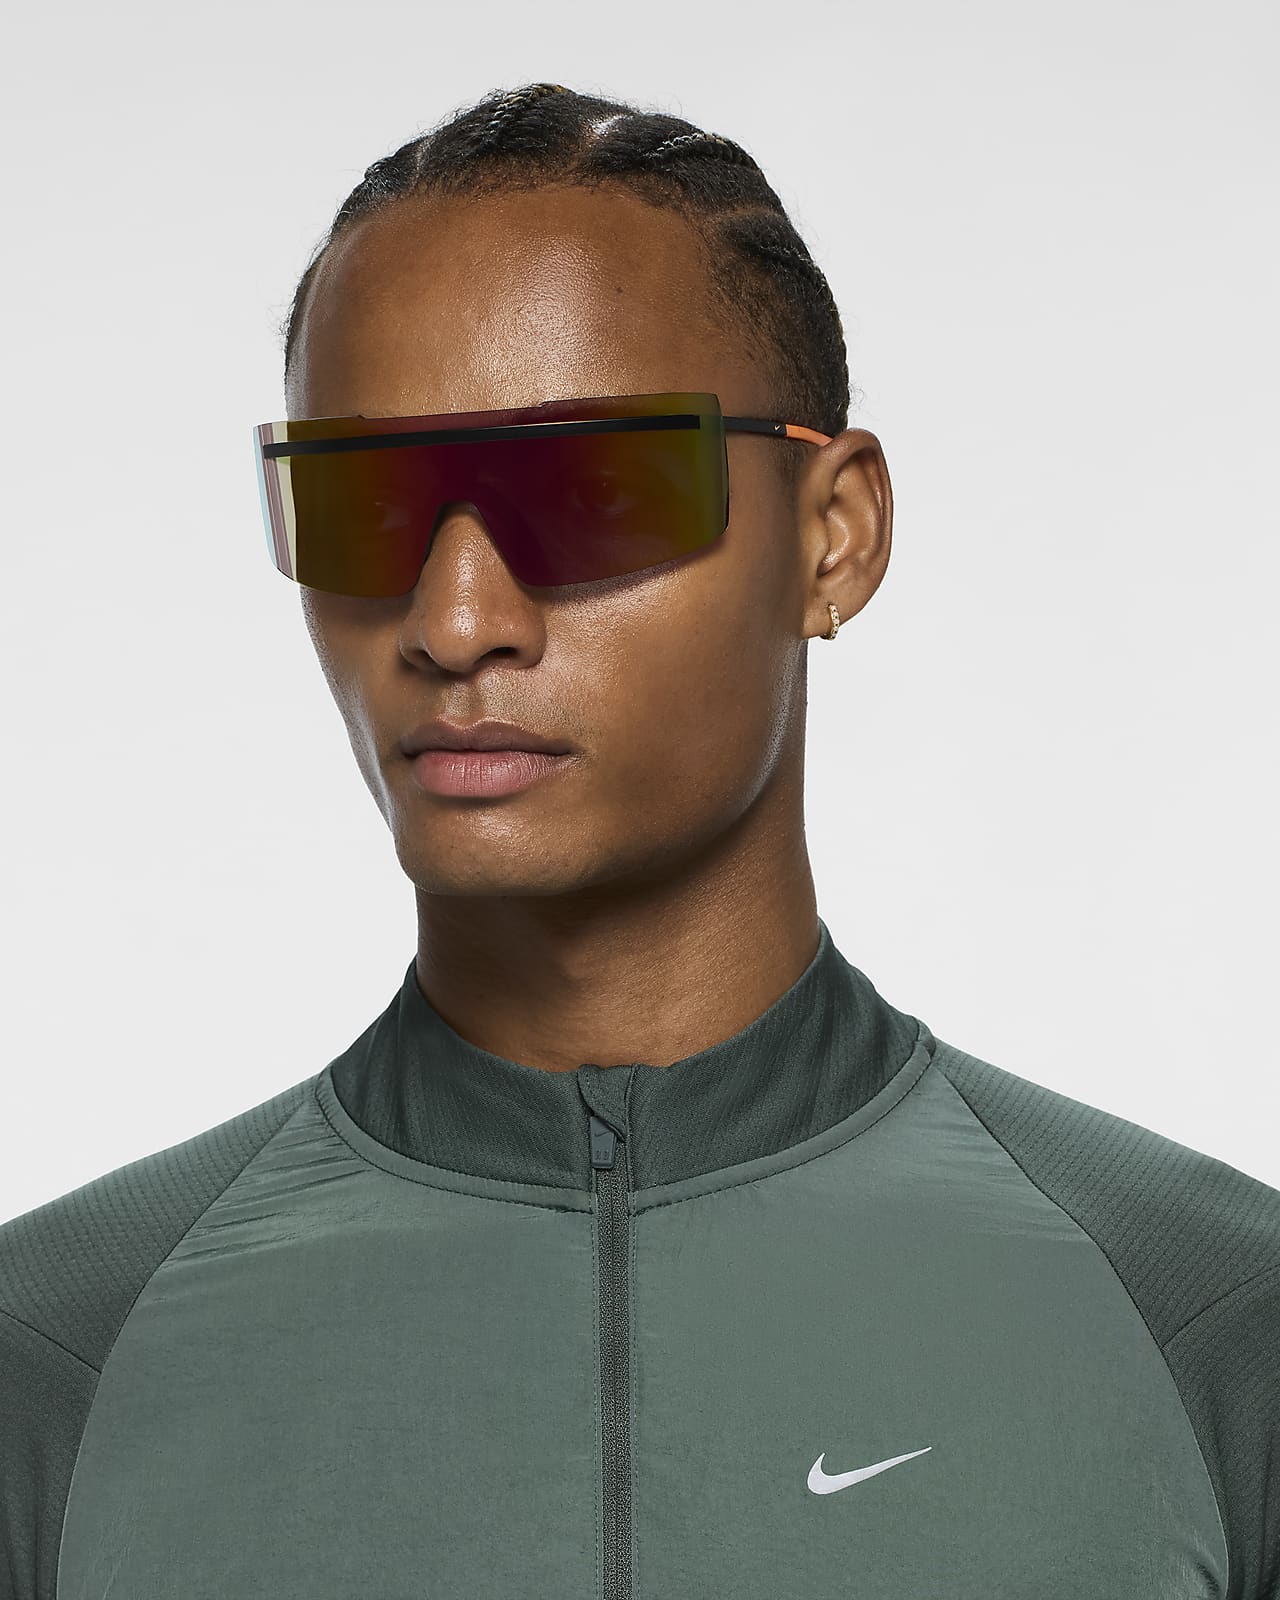 Nike Echo Shield Road Tint Sunglasses